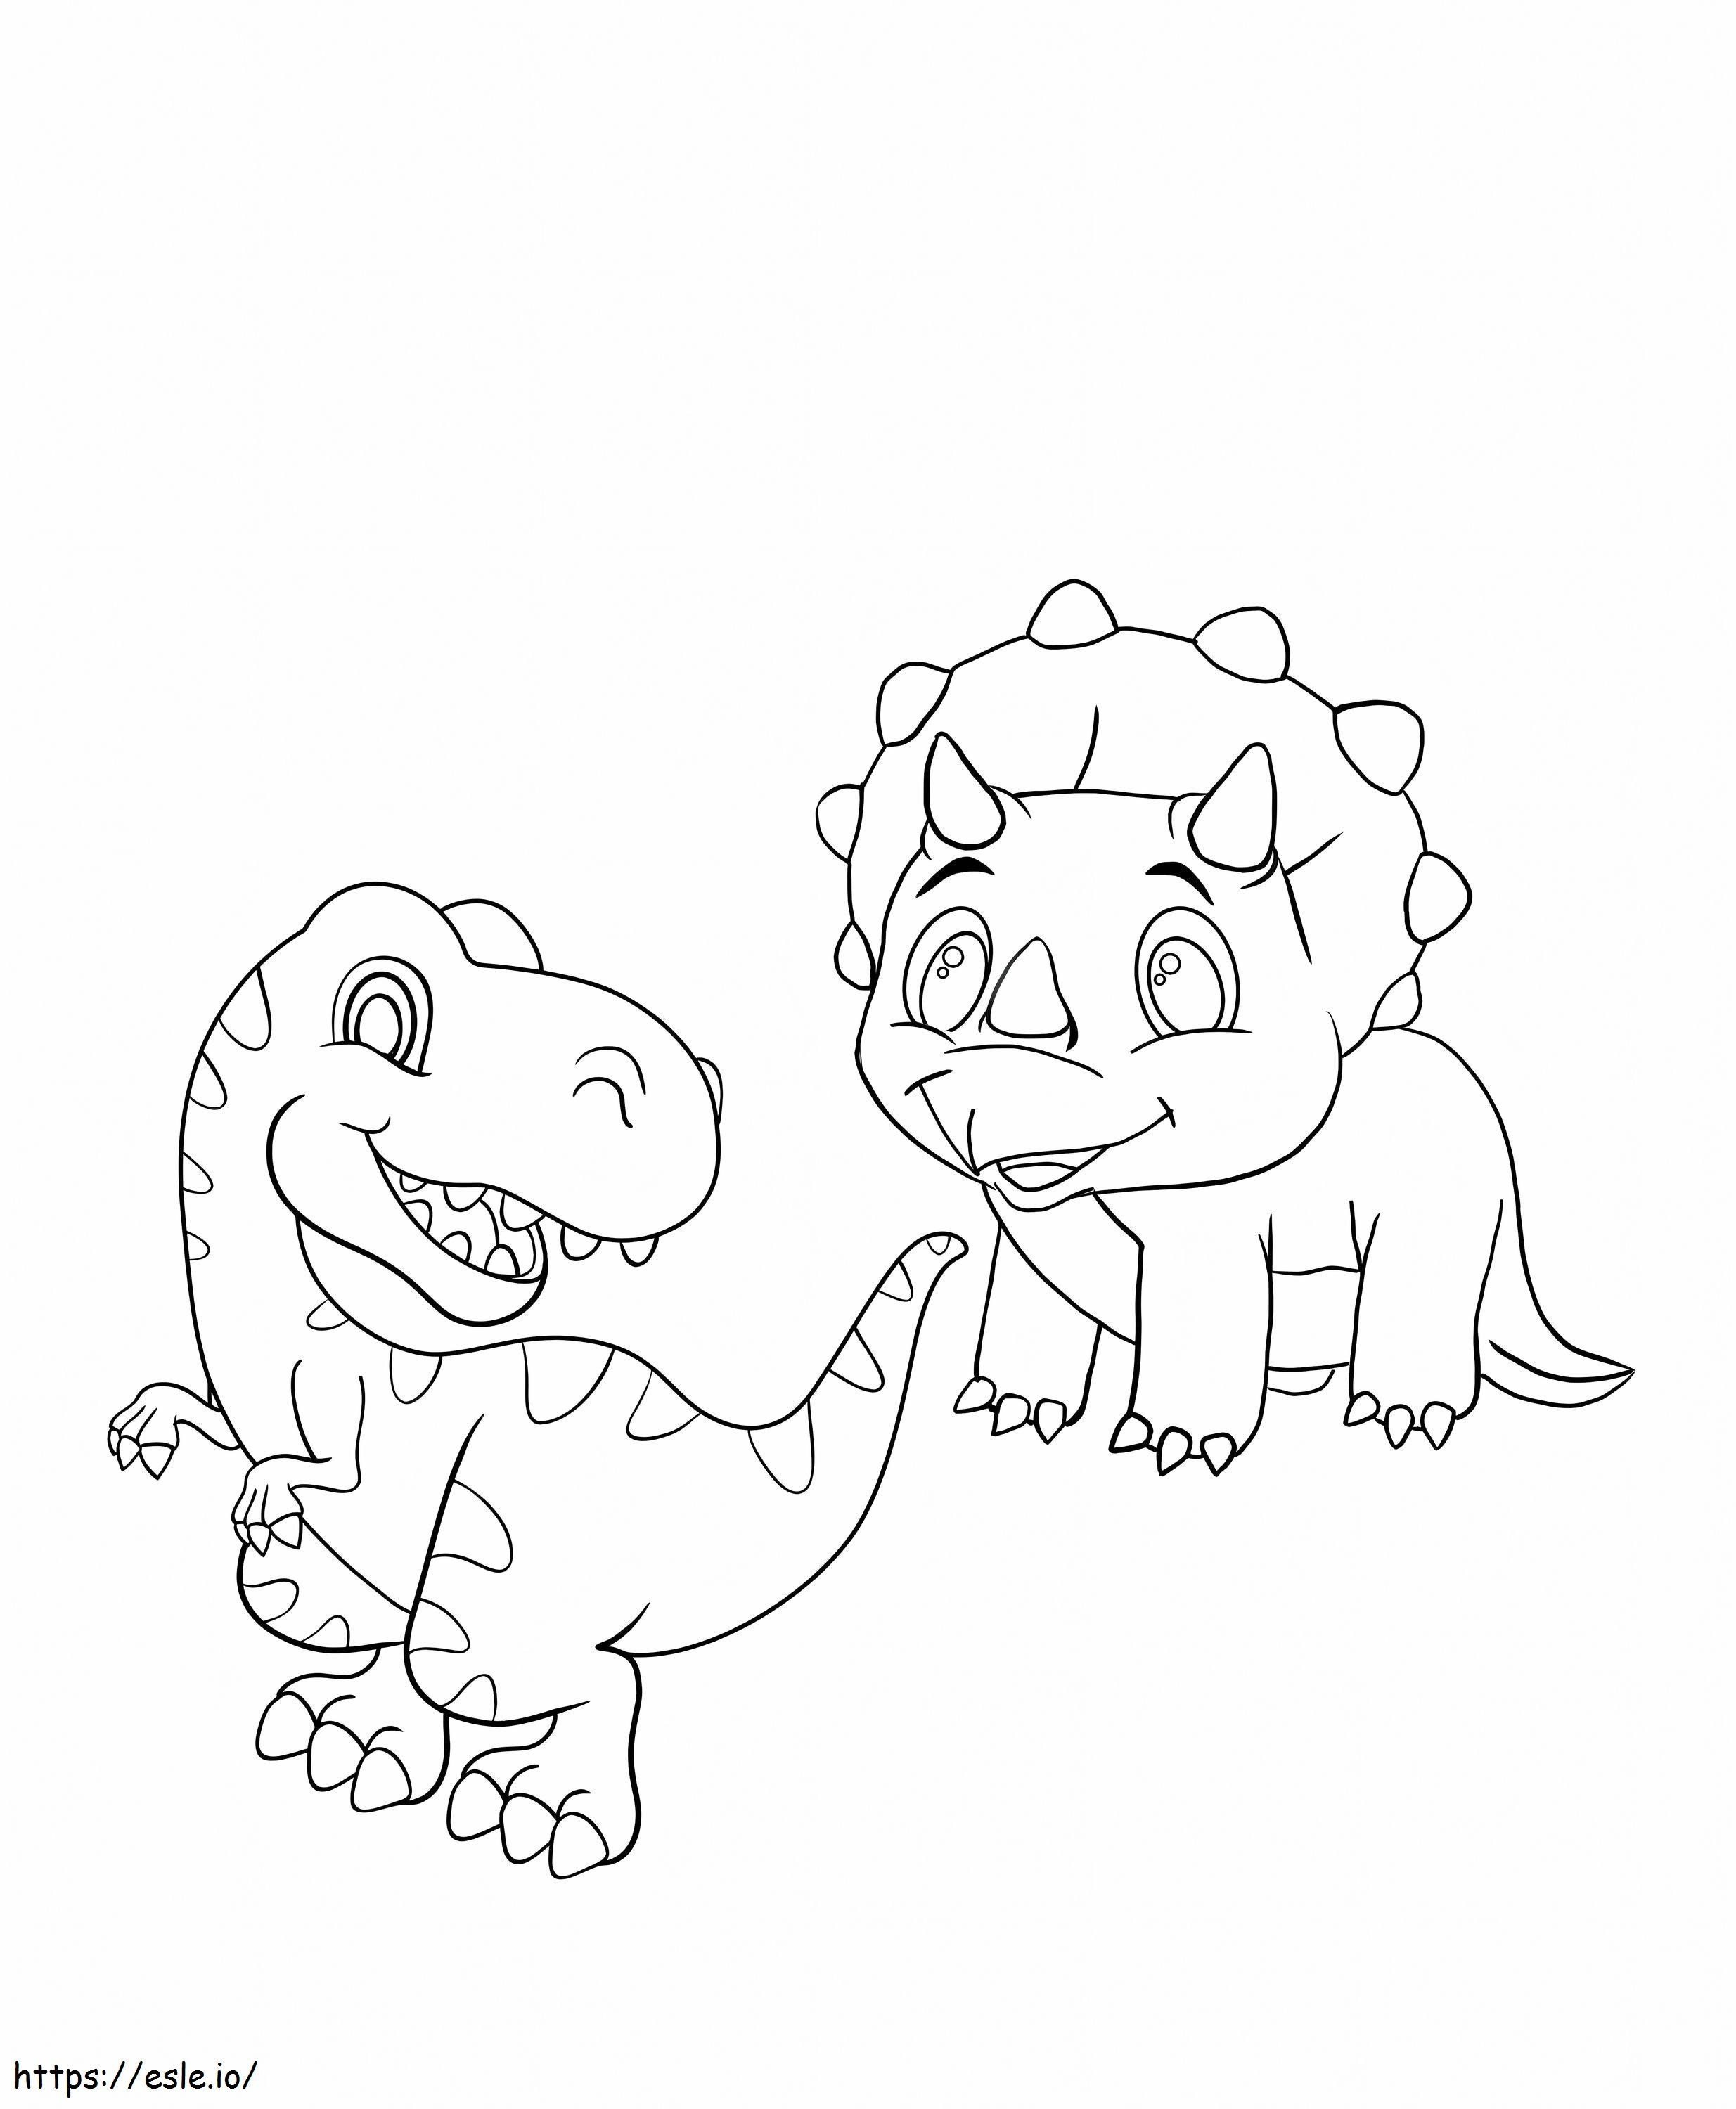 Chibi Tiranossauro Rex e Tricerátopo para colorir